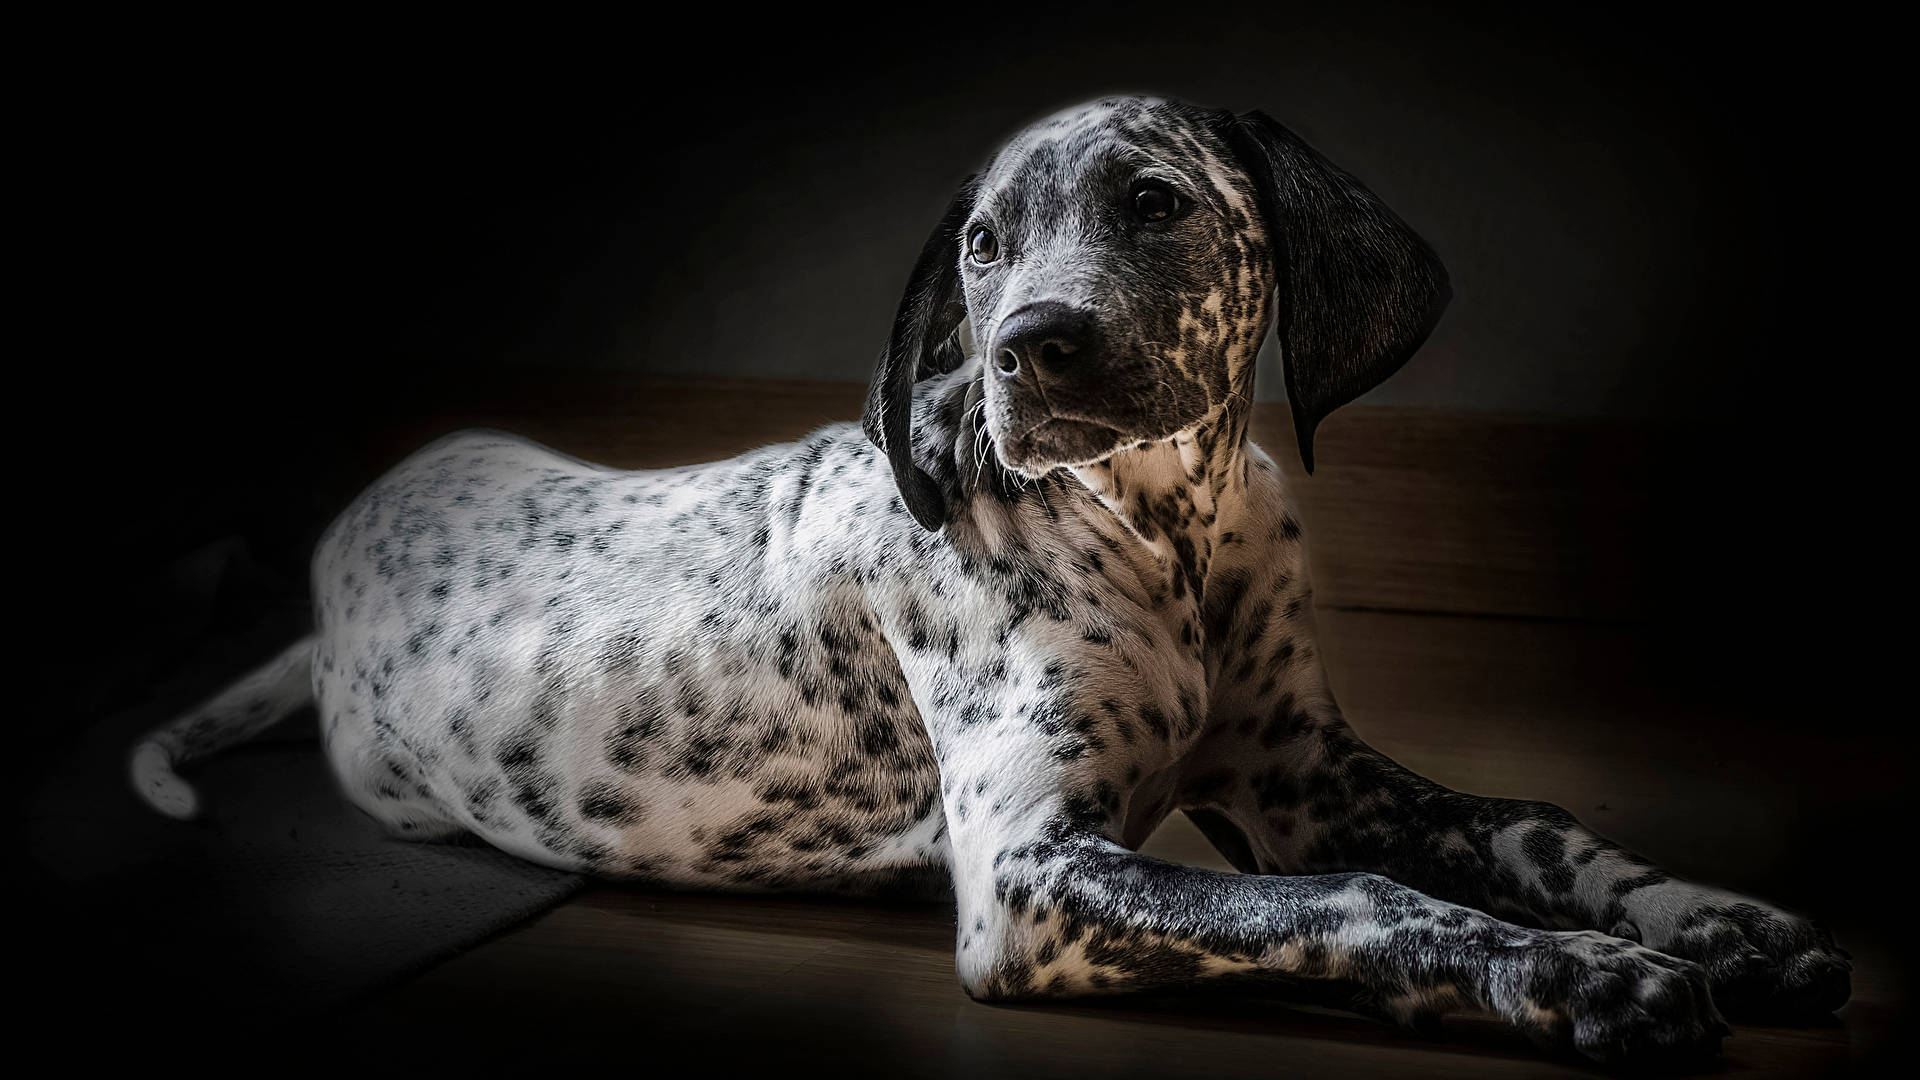 Dalmatian Dog Photography